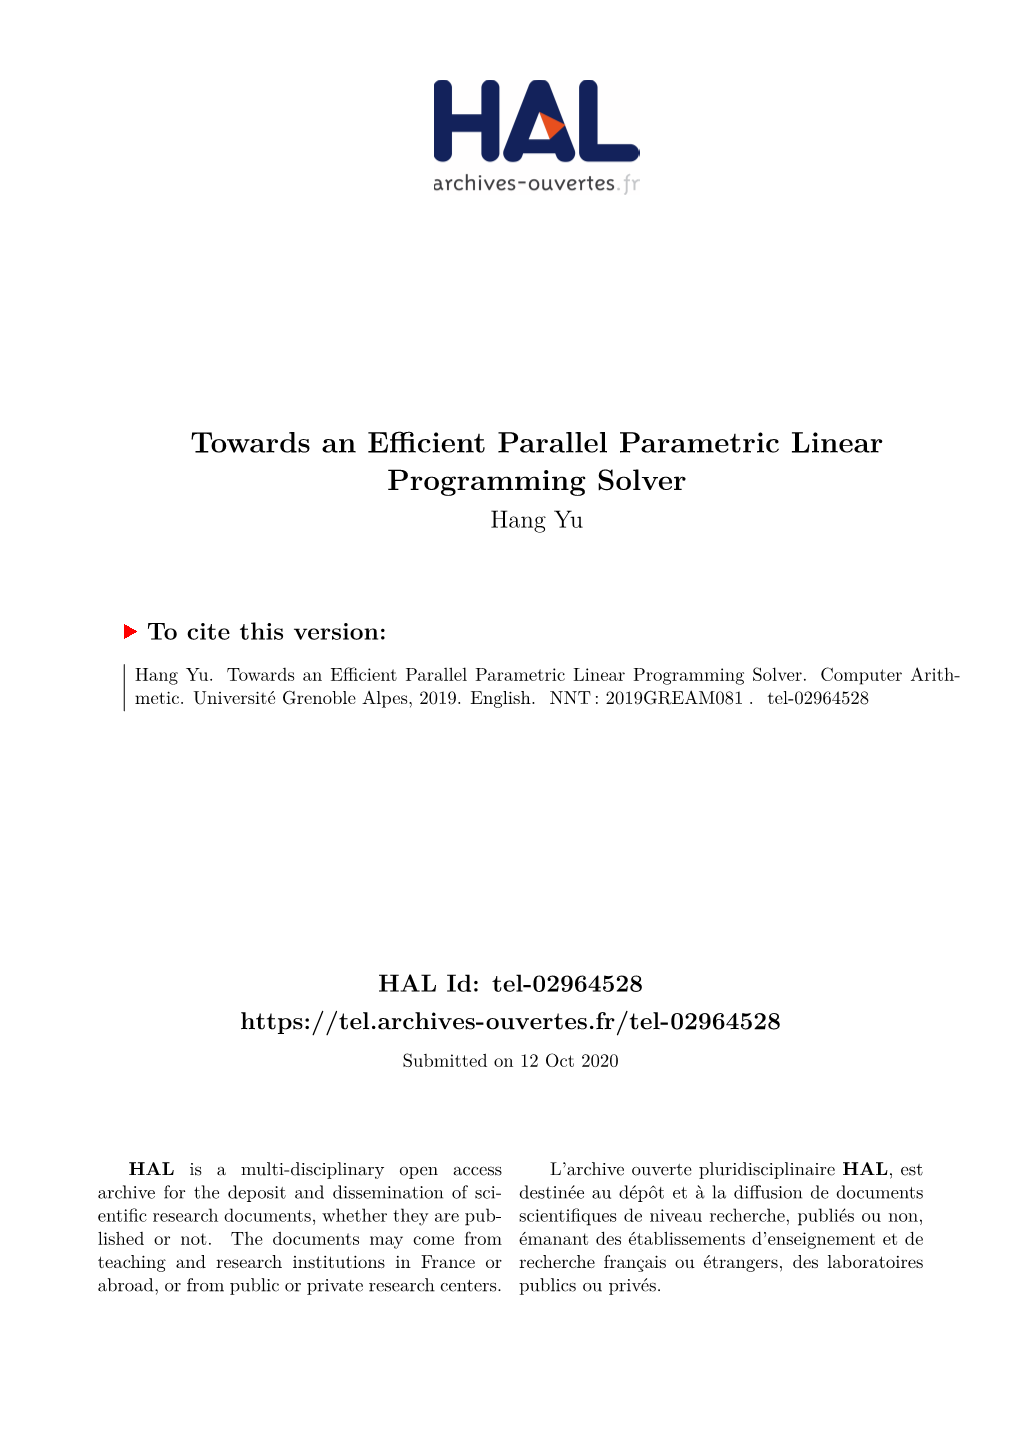 Towards an Efficient Parallel Parametric Linear Programming Solver